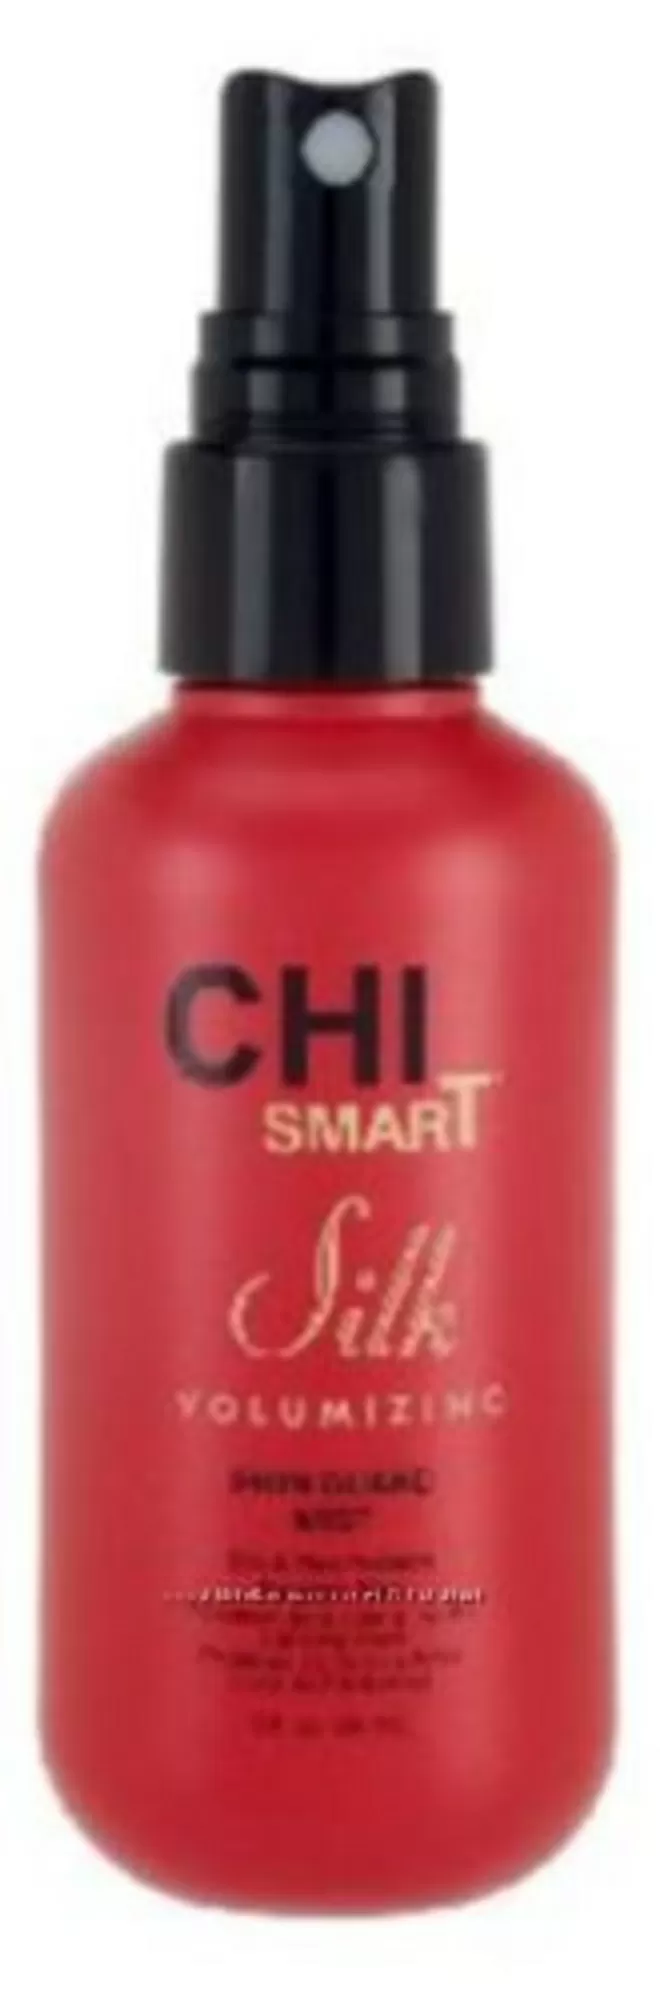 CHI Smart Silk шёлковый спрей термо-защита,  89мл. Эксклюзивно 2